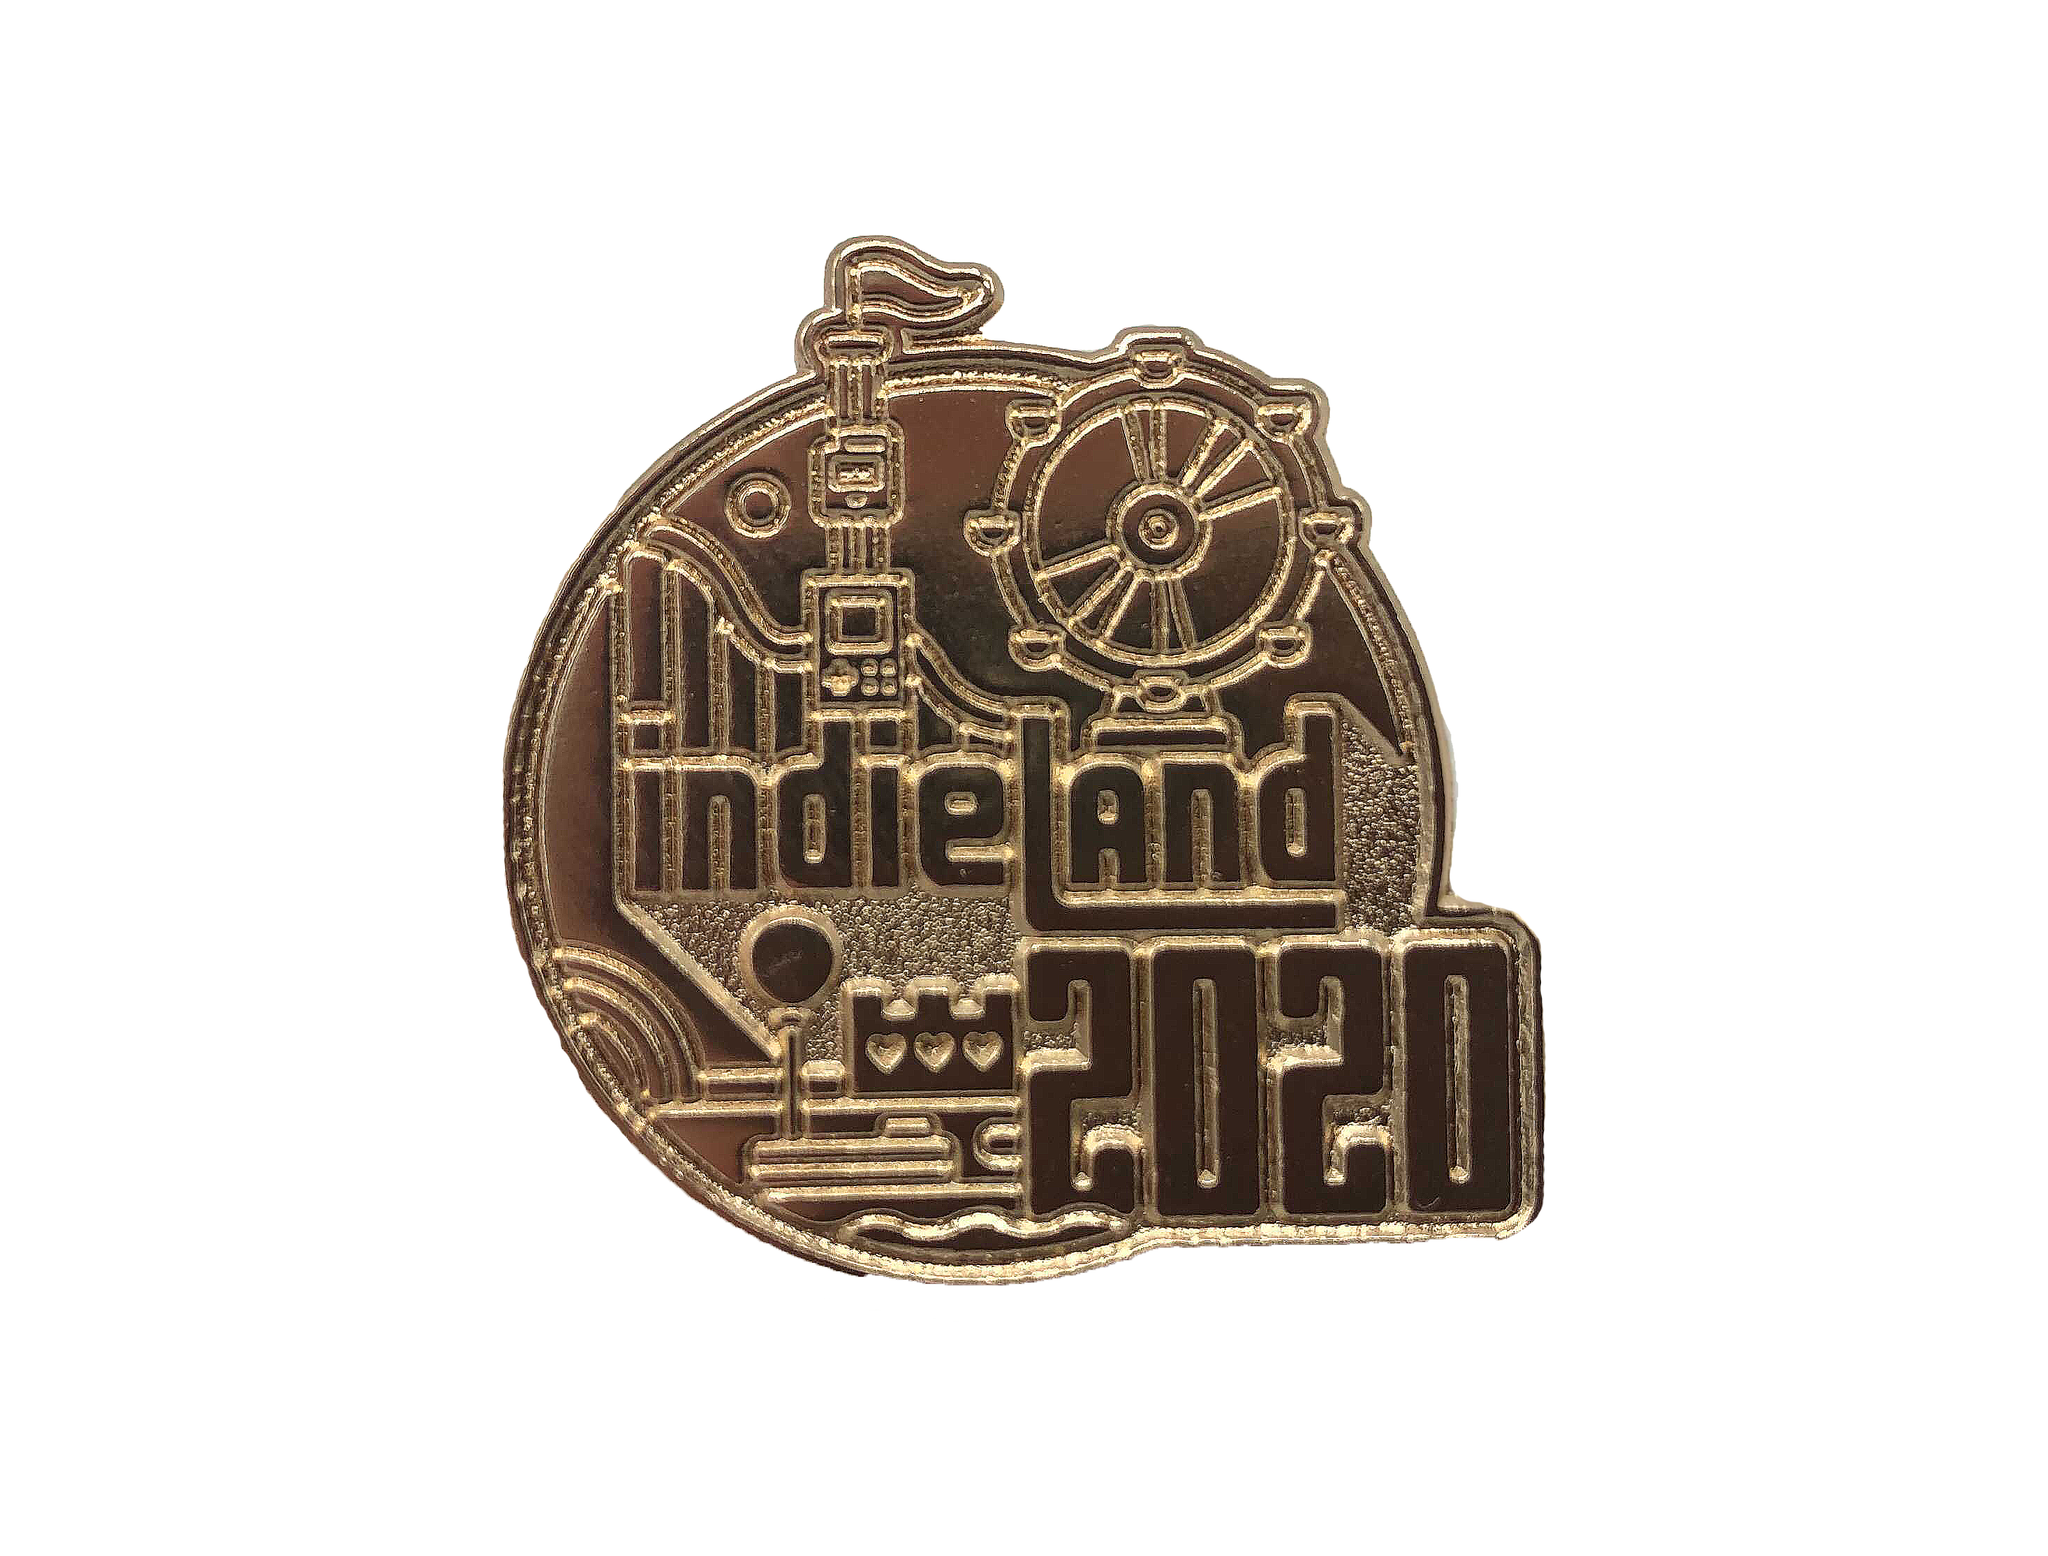 IndieLand 2020 Pin